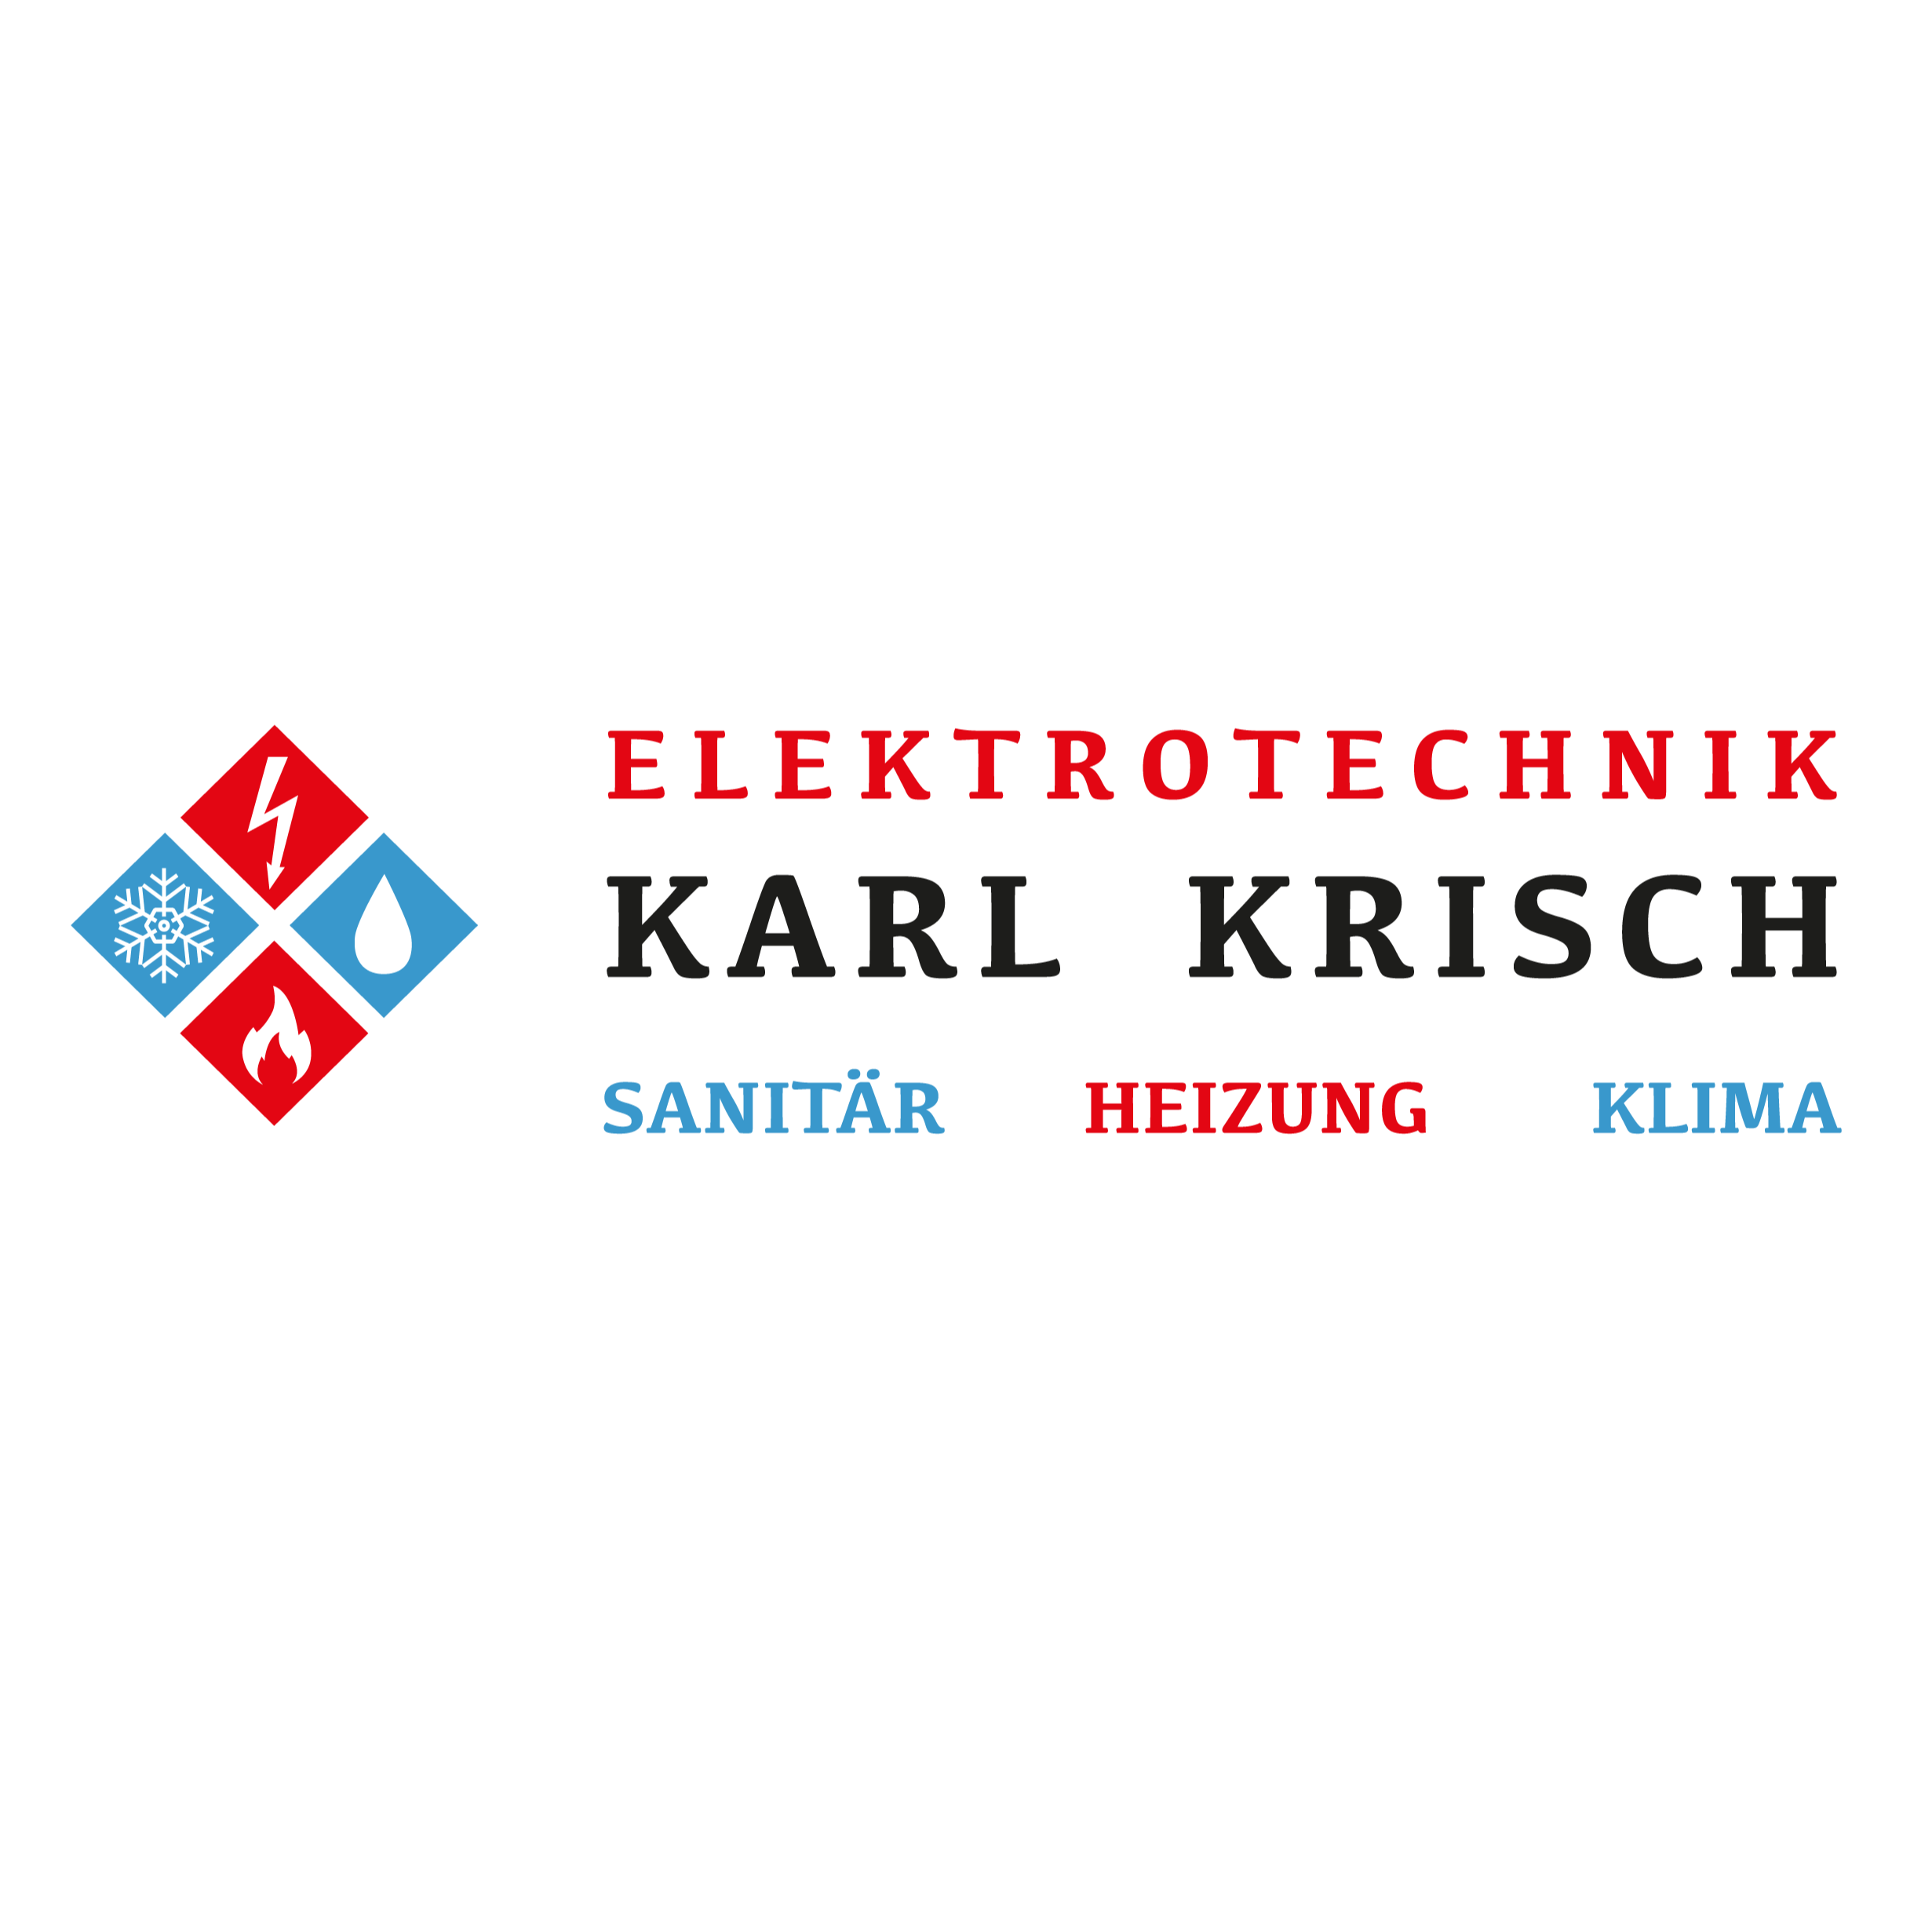 Elektrotechnik Karl Krisch e.U. in Gänserndorf Logo